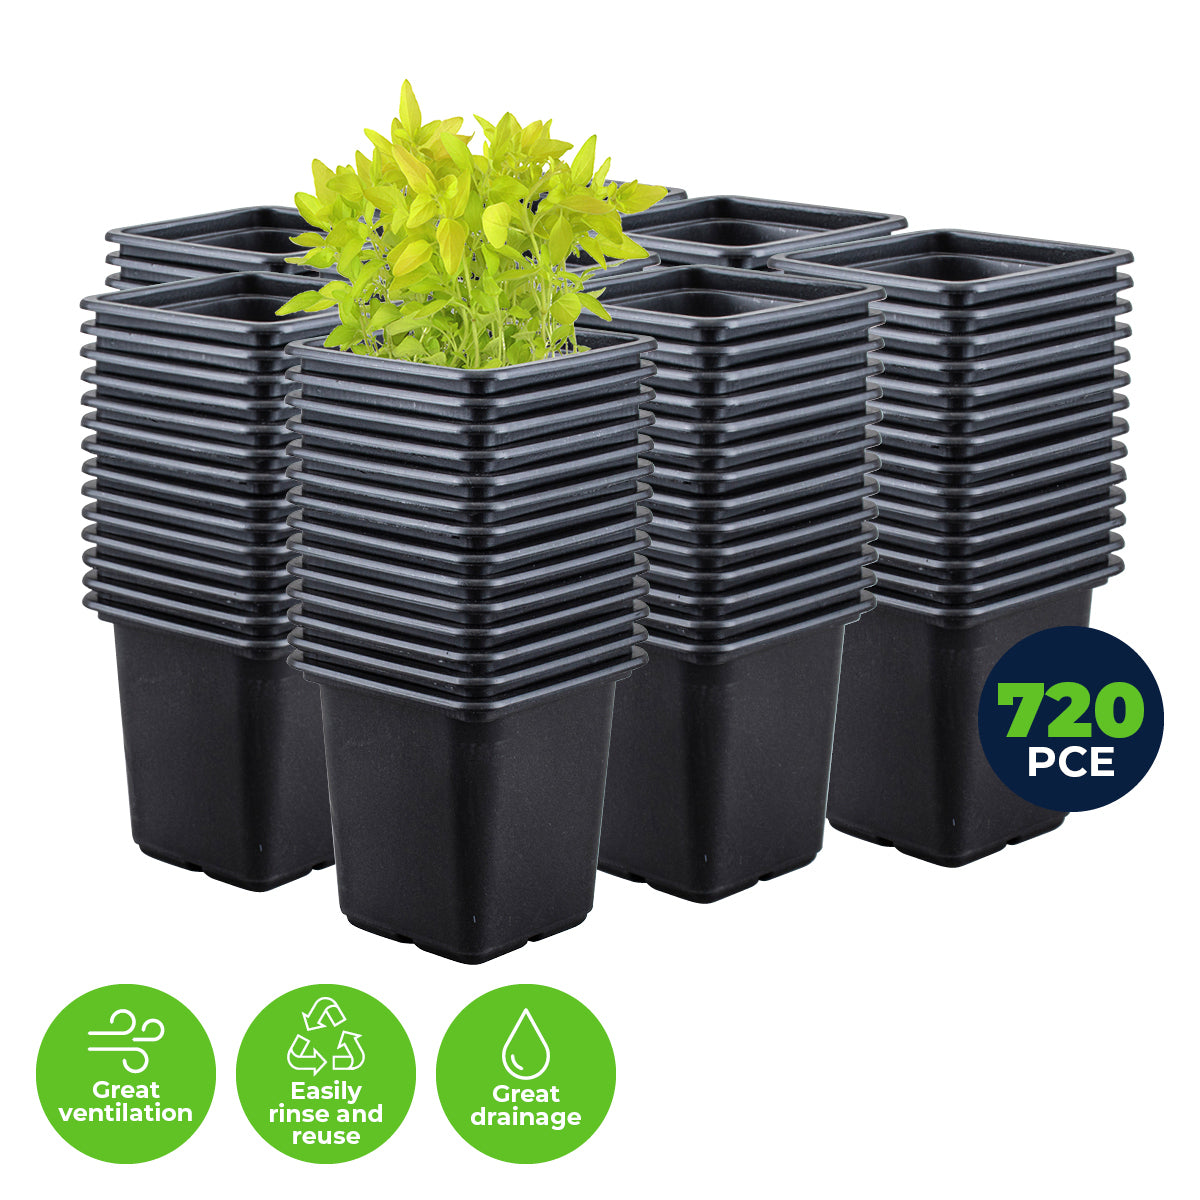 Garden Greens 720PCE Seedling Pots Plastic Square Reusable Durable 7.7 x 8cm